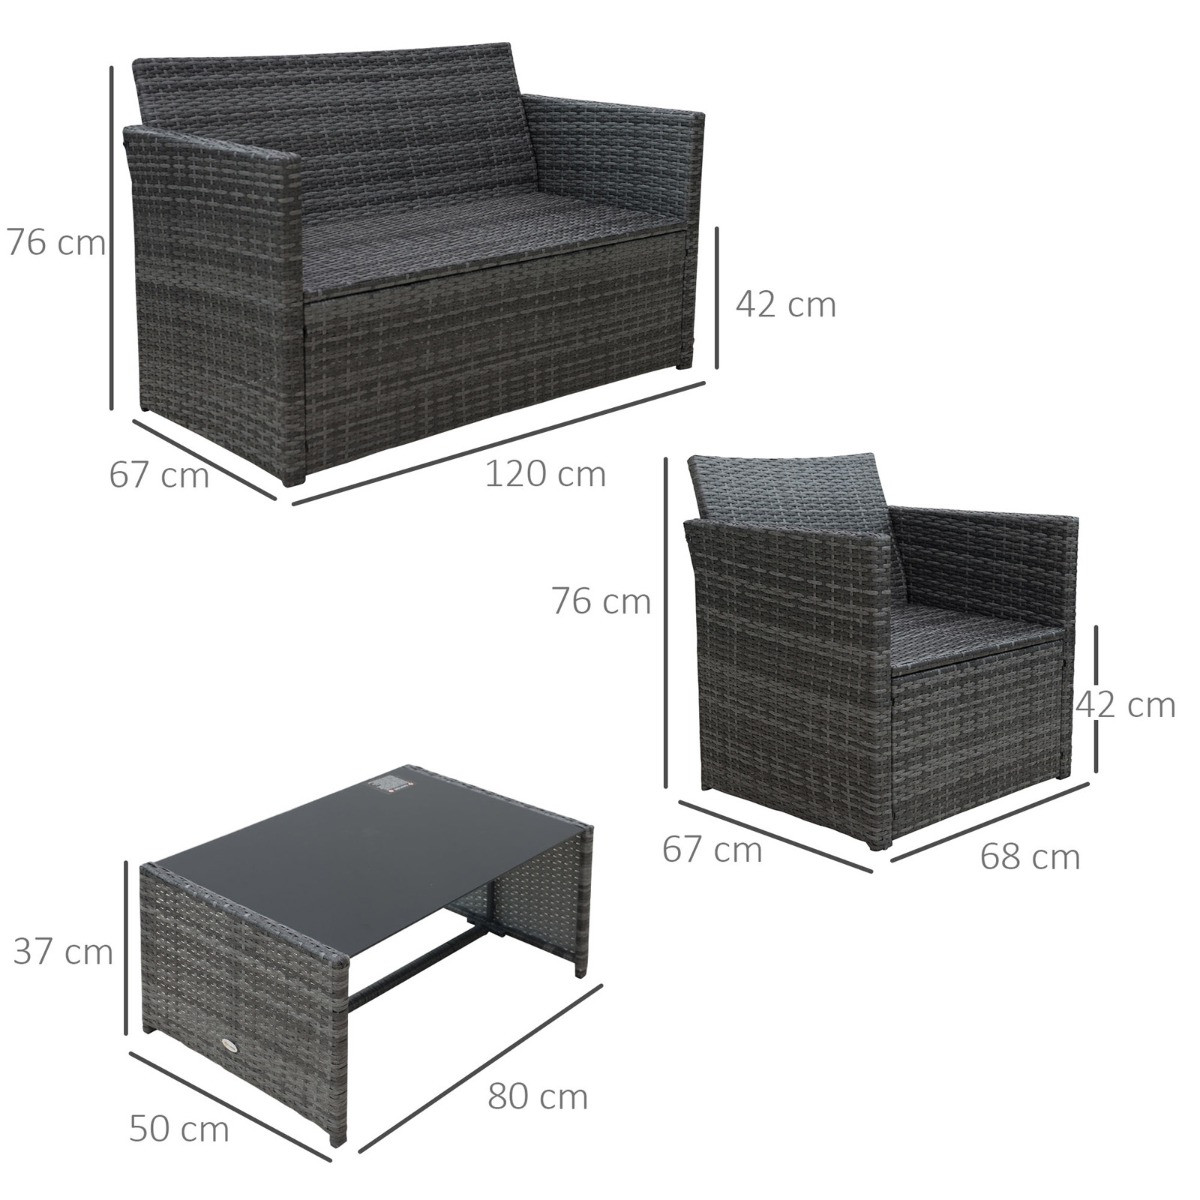 Outsunny Rattan Garden Sofa Set With Coffee Table, 4 Piece - Grey>